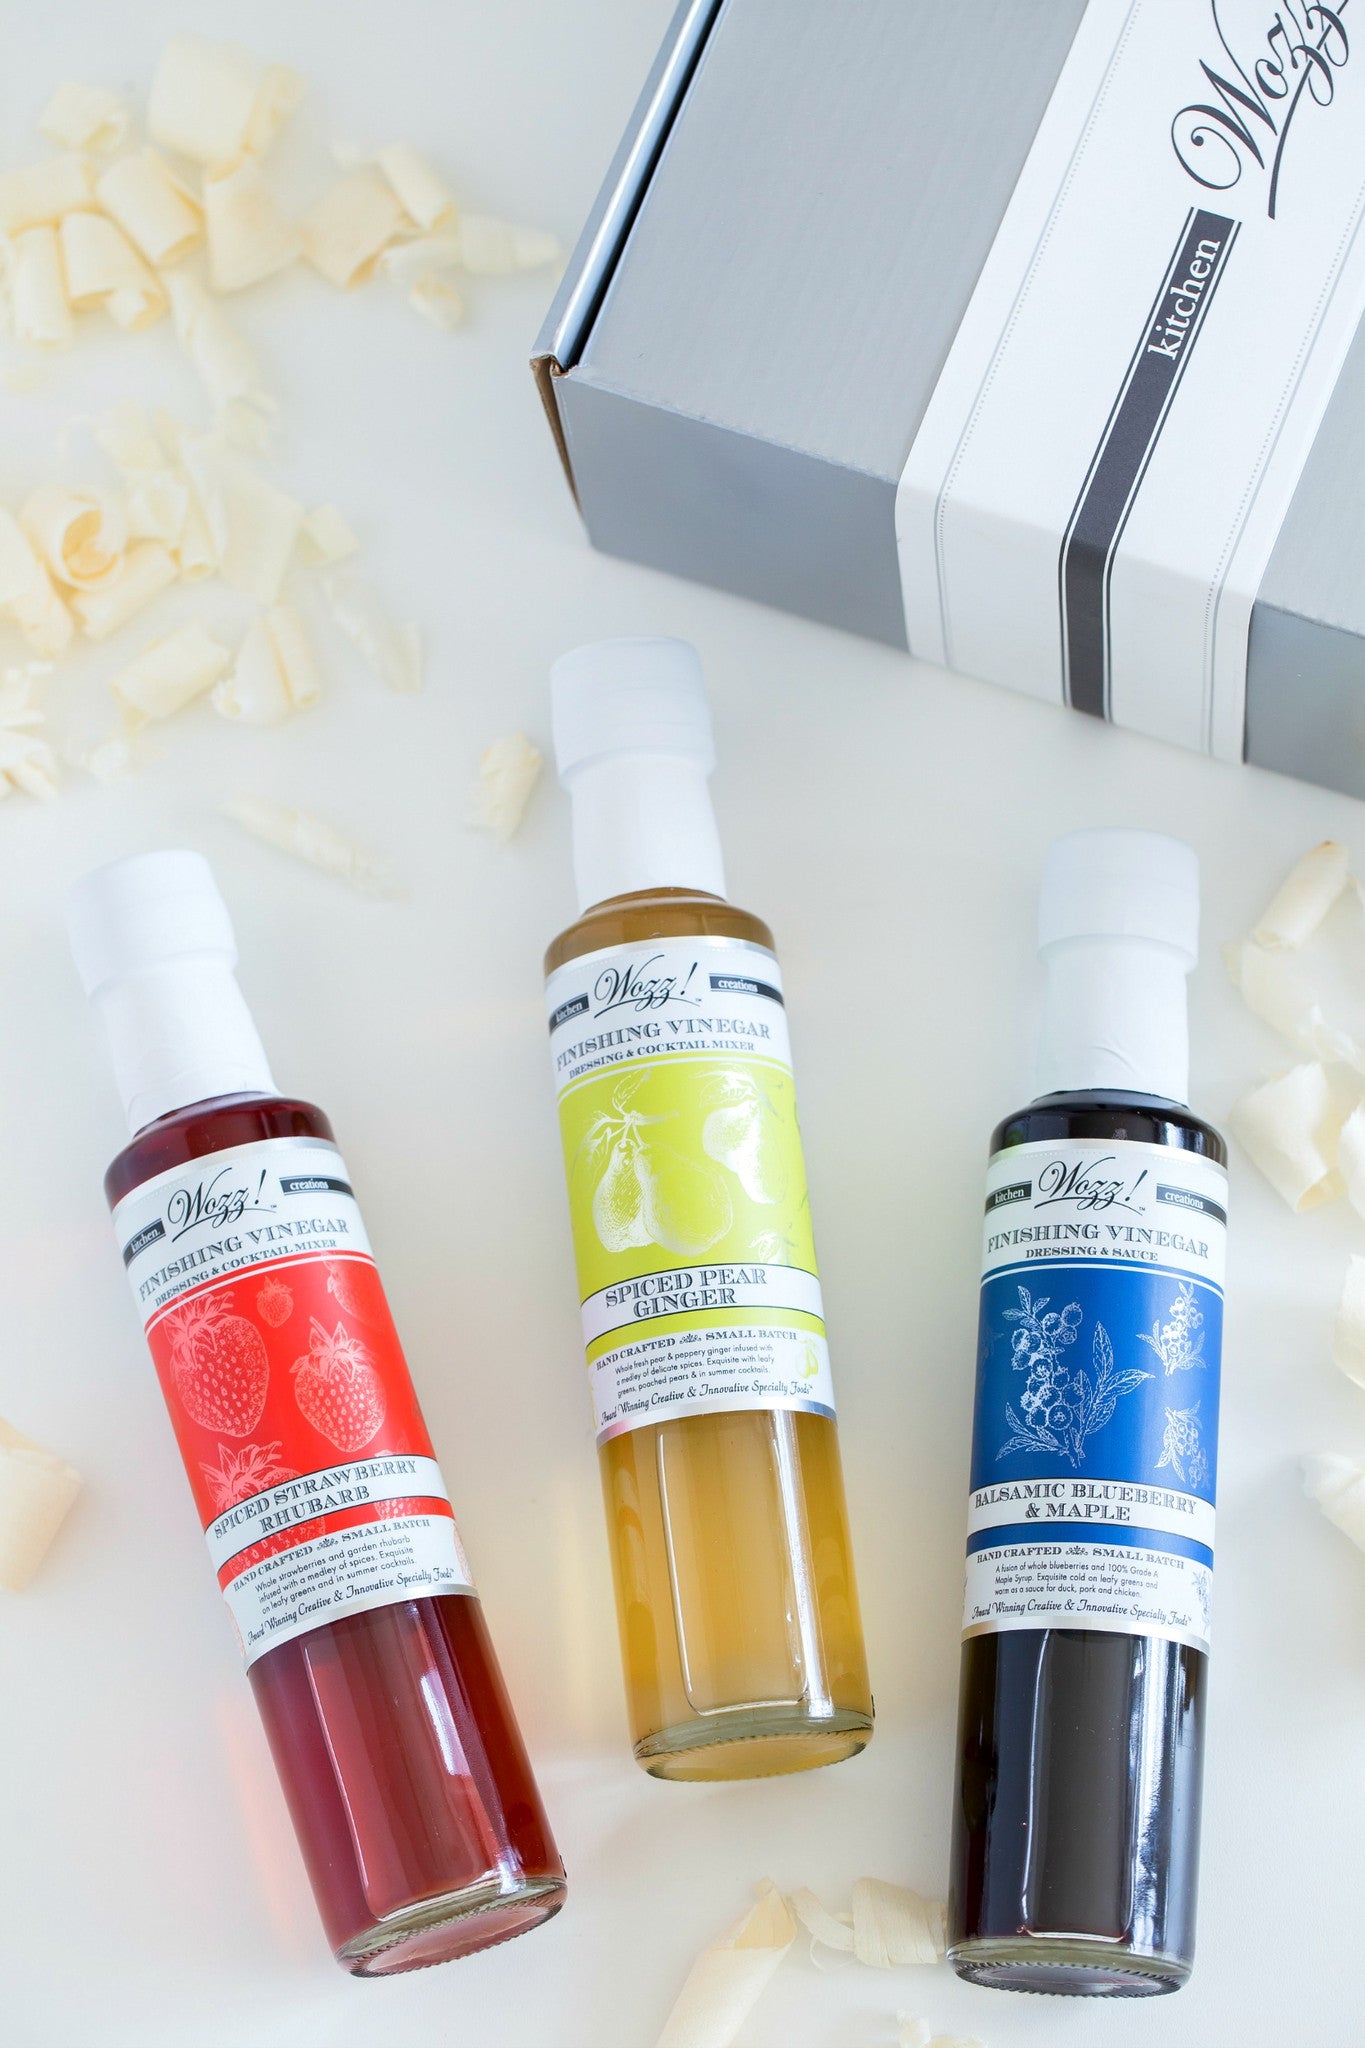 Vinegar Gift Box | Wozz! Kitchen Creations